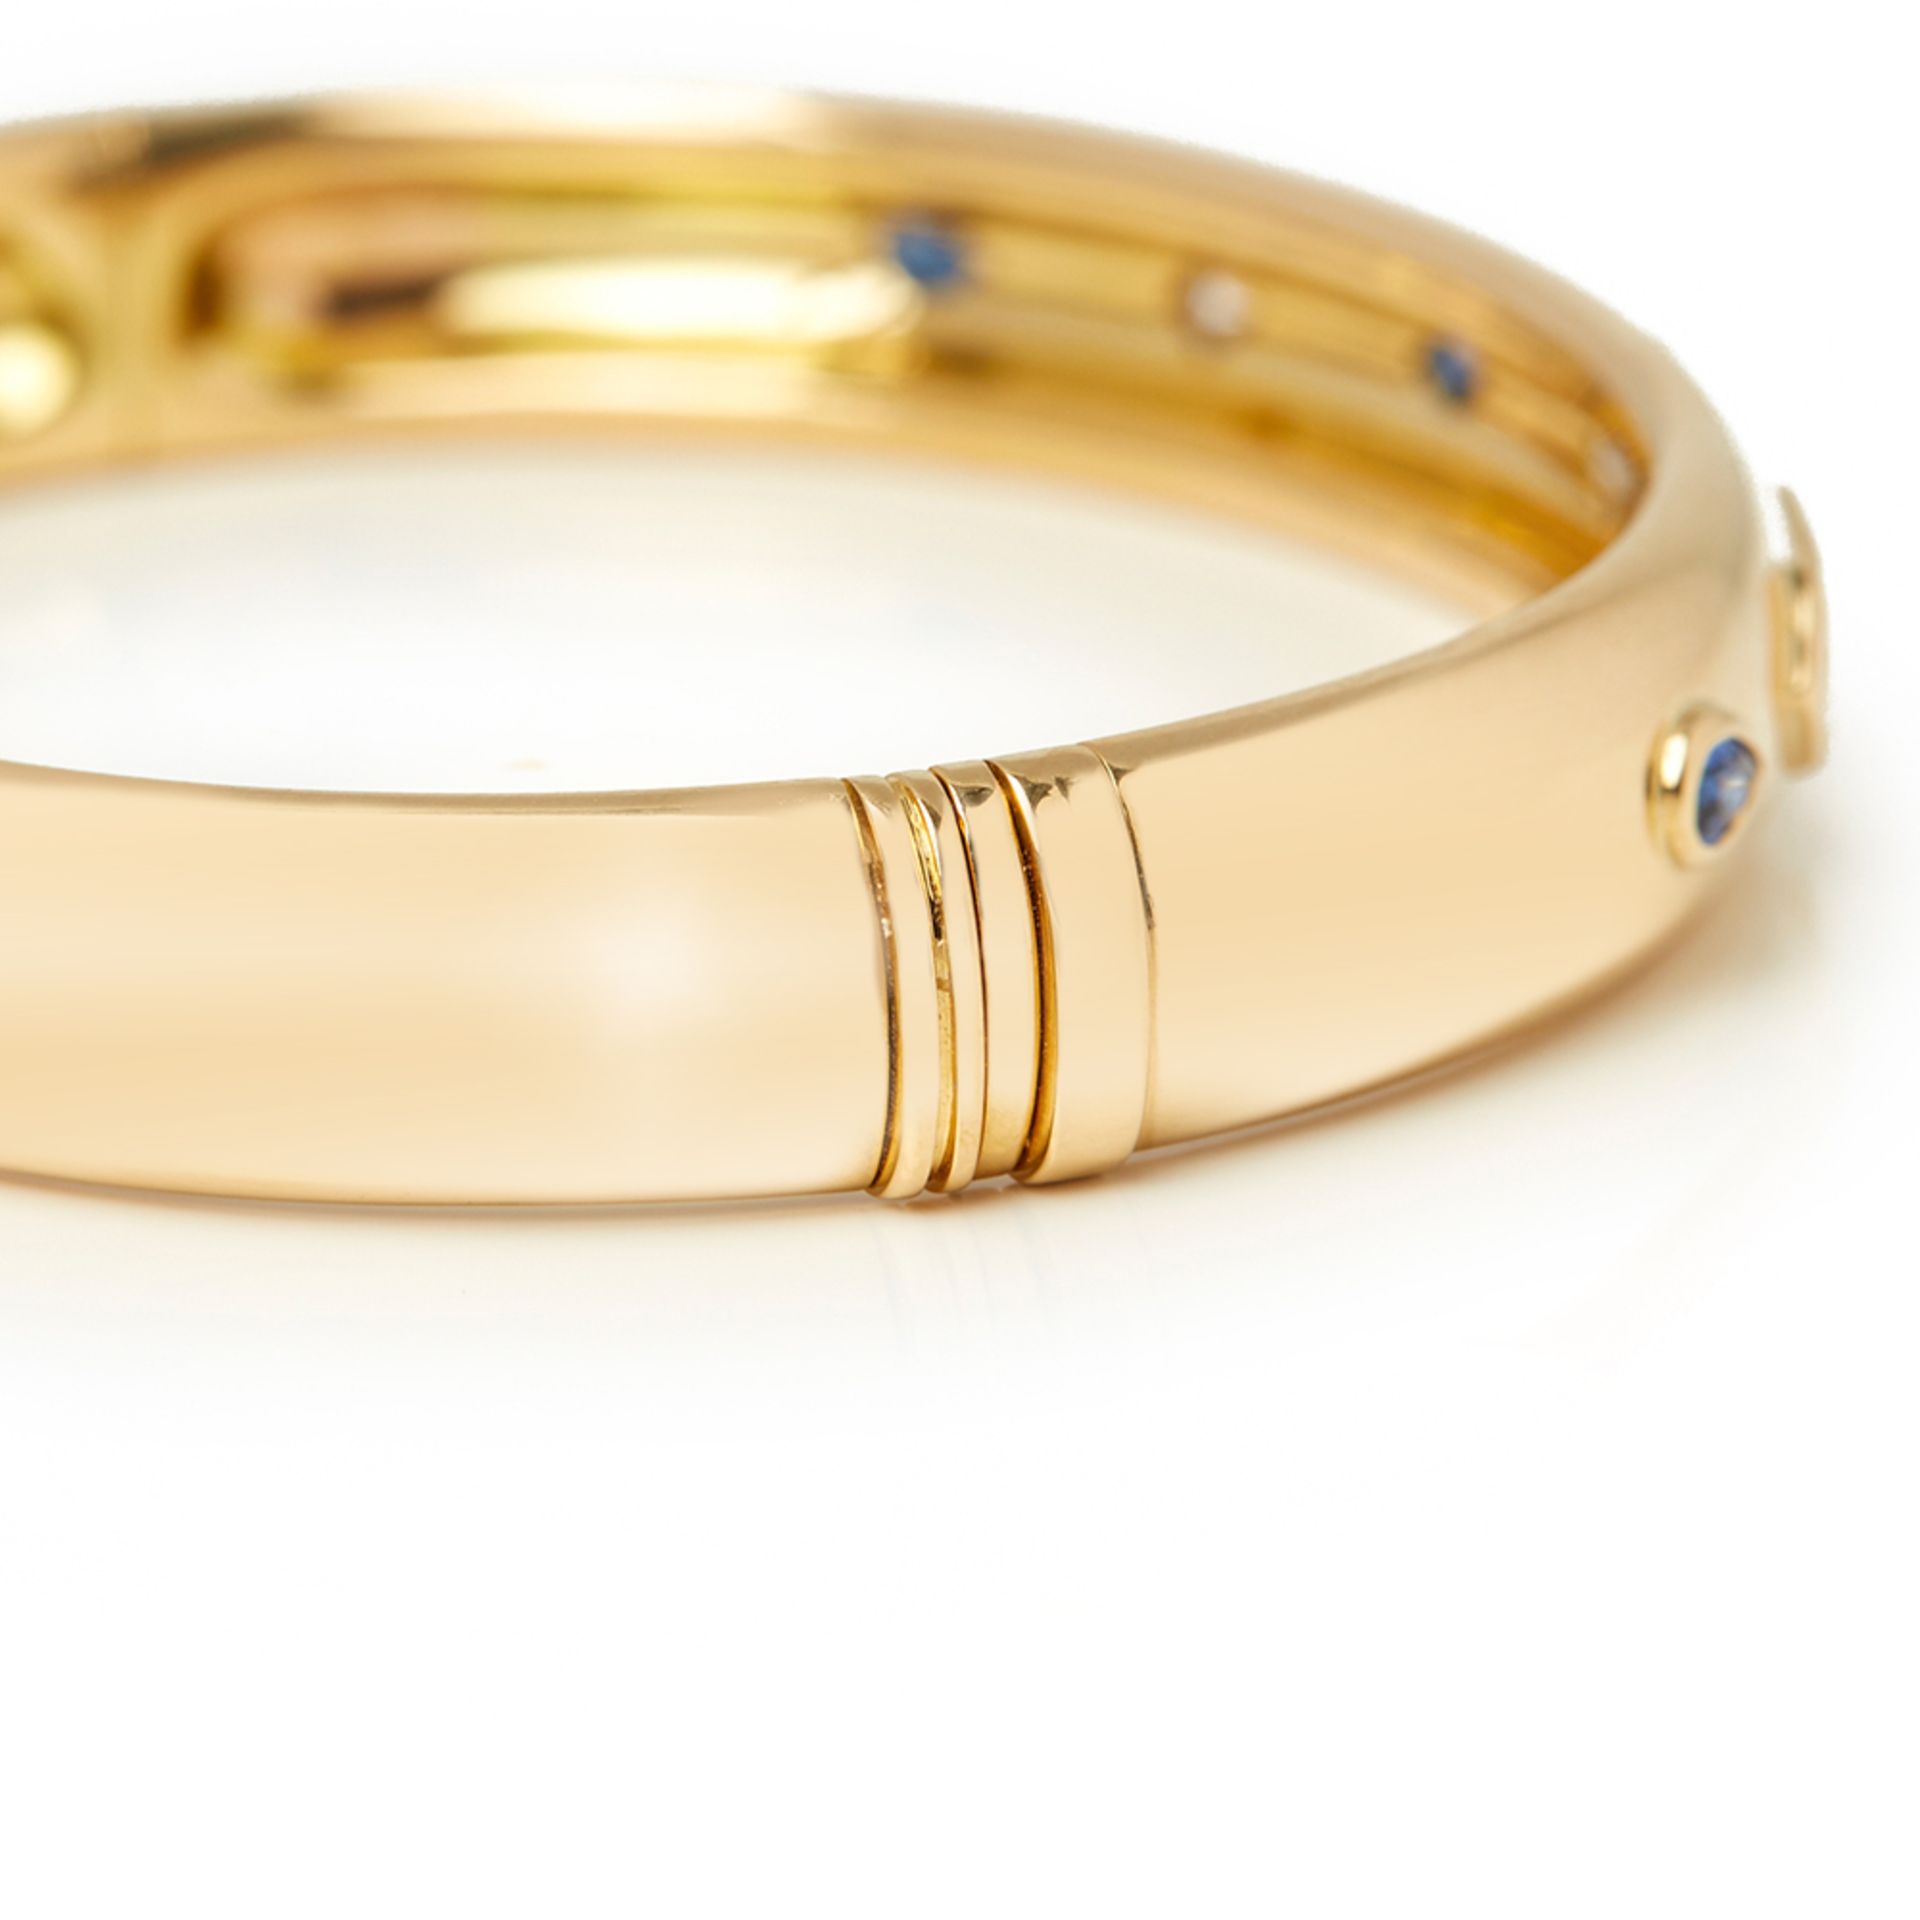 Cartier 18k Yellow Gold Sapphire & Diamond Cuff Bracelet - Image 2 of 7